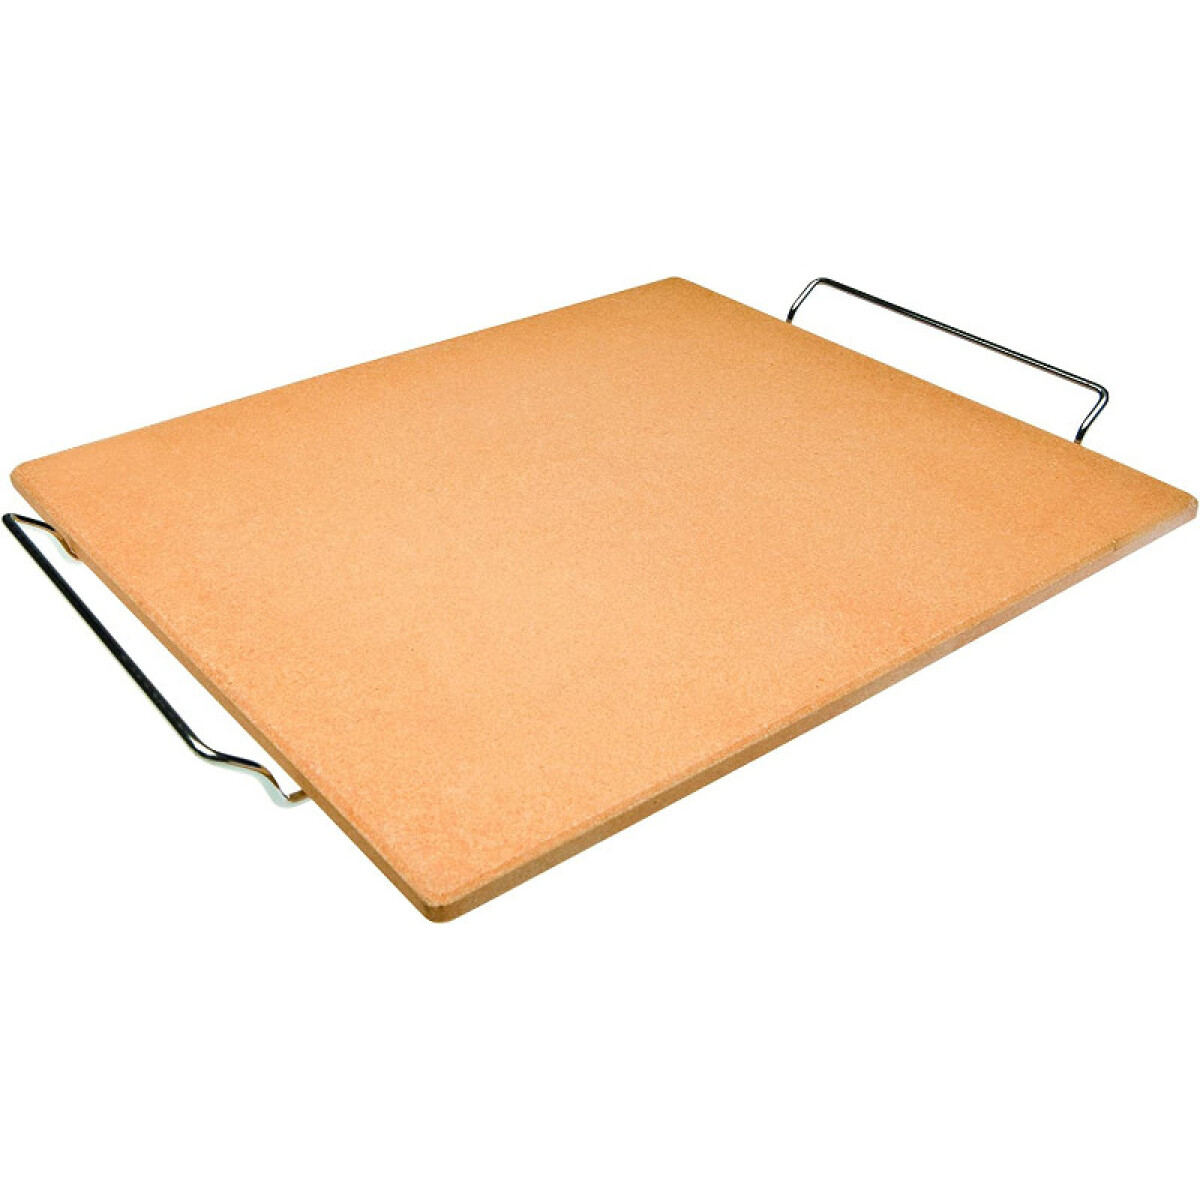 Piedra pizza con soporte rectangular 